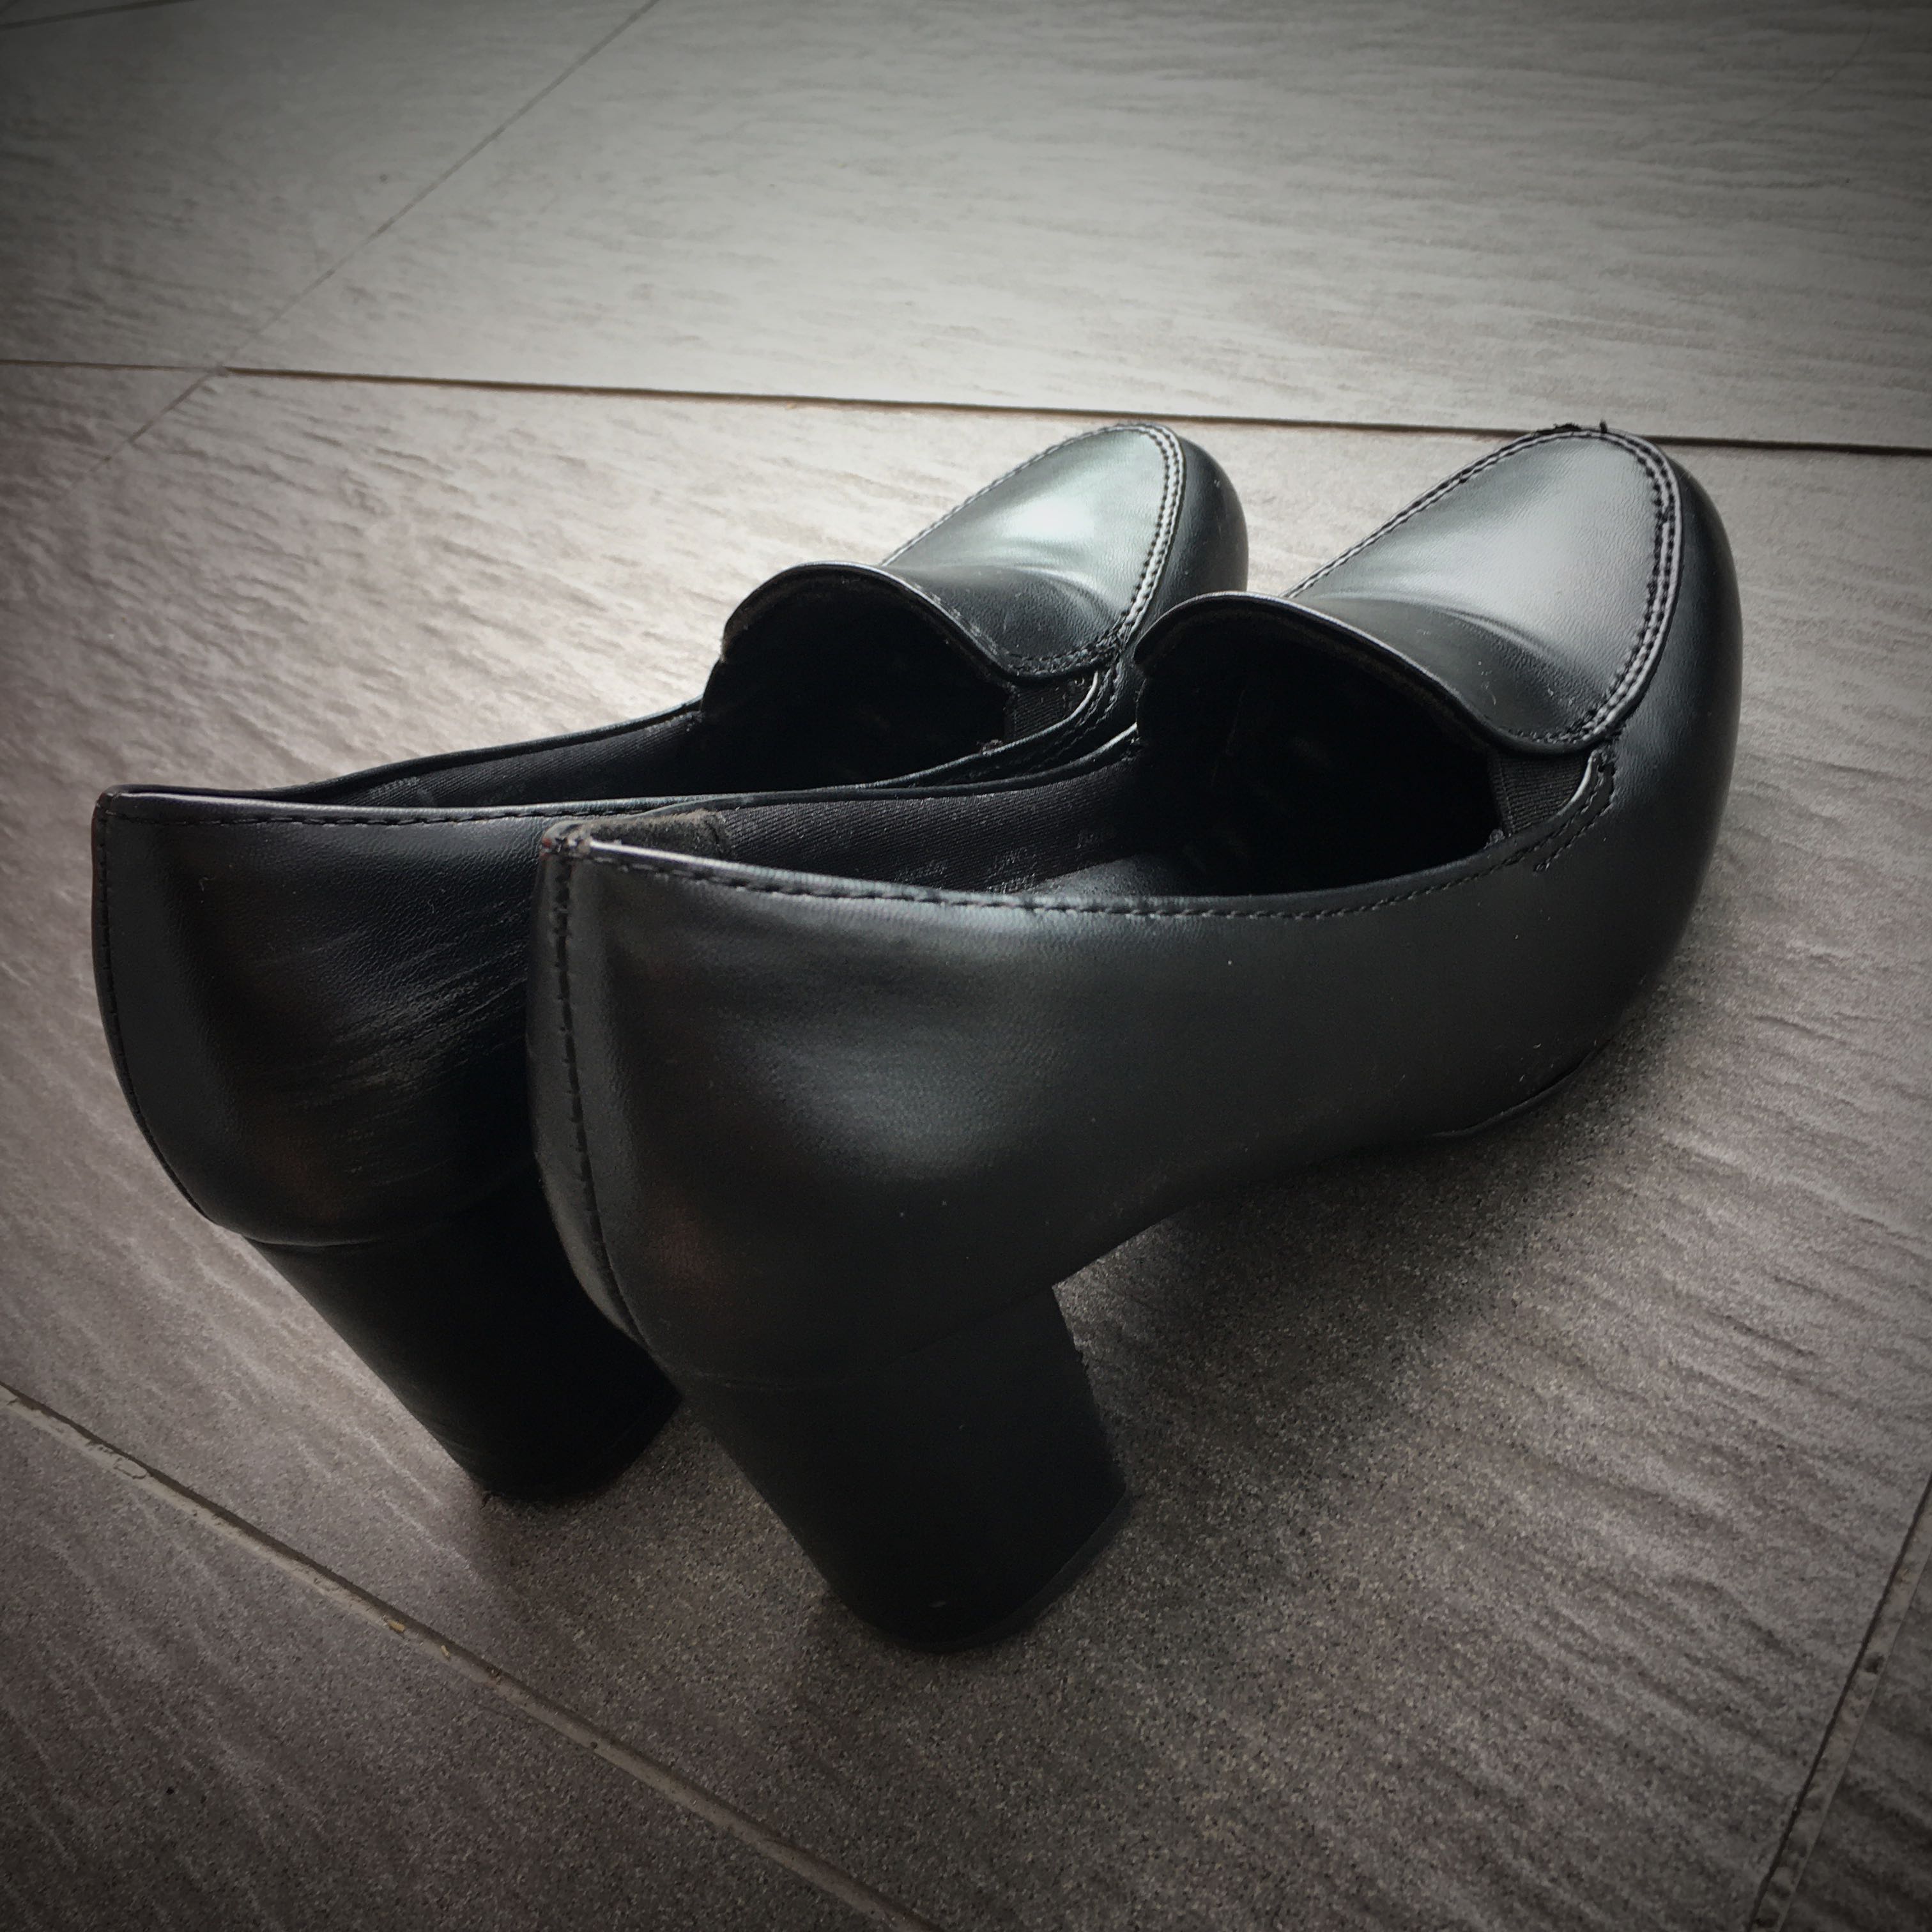 bata black formal shoes for ladies